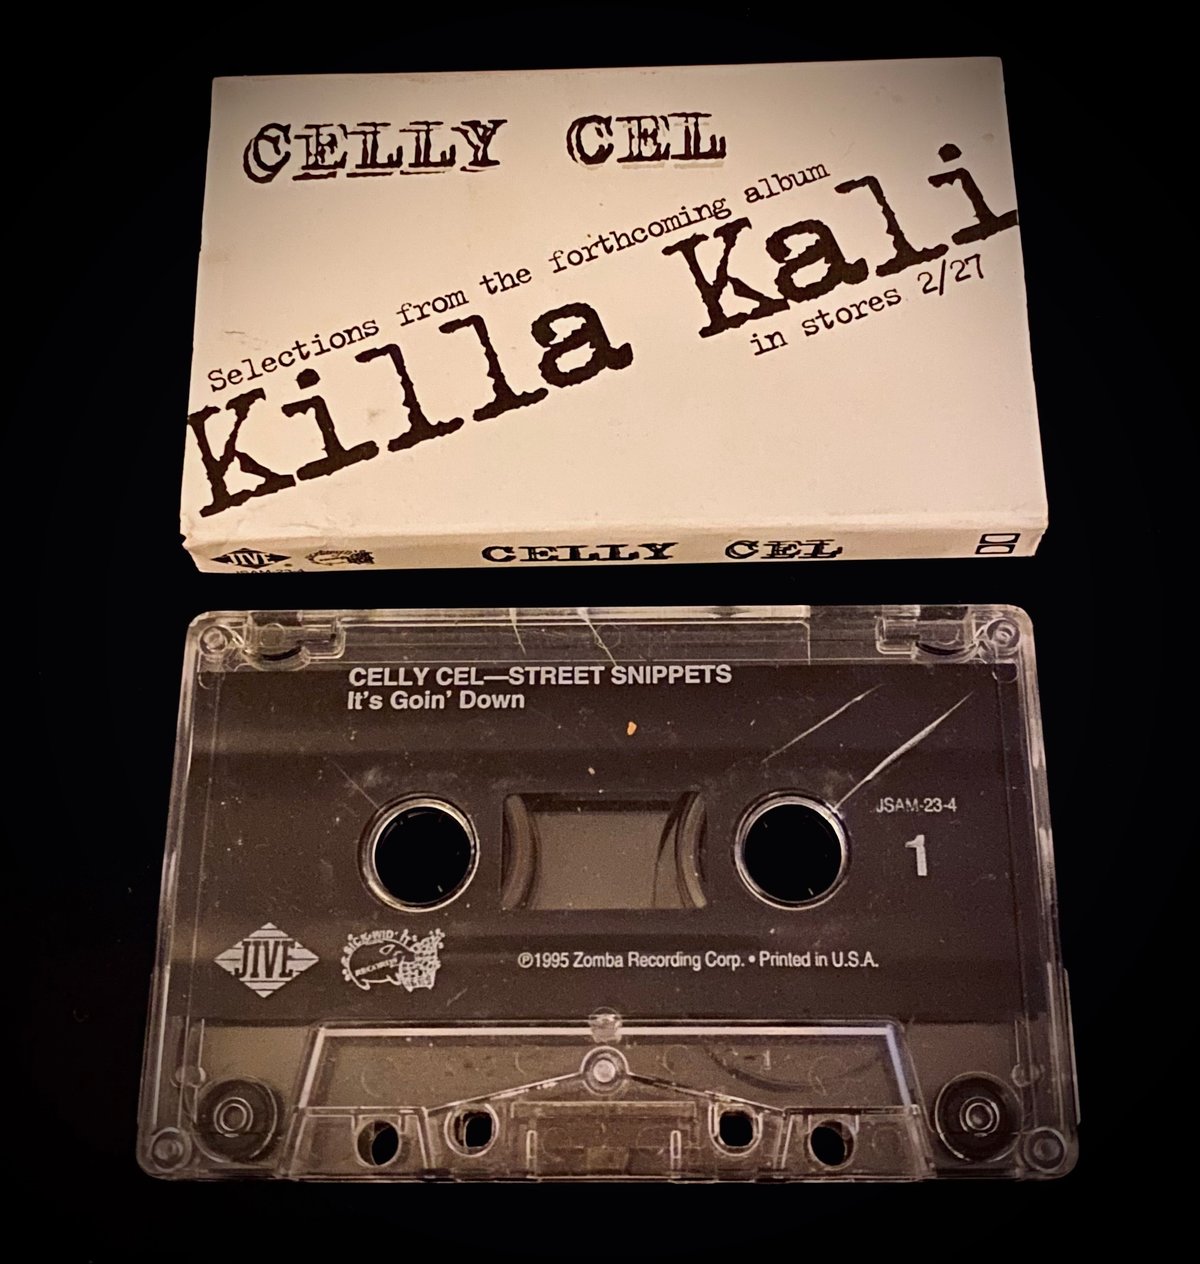 Image of Celly Cell “Killa Kali” sampler PROMO